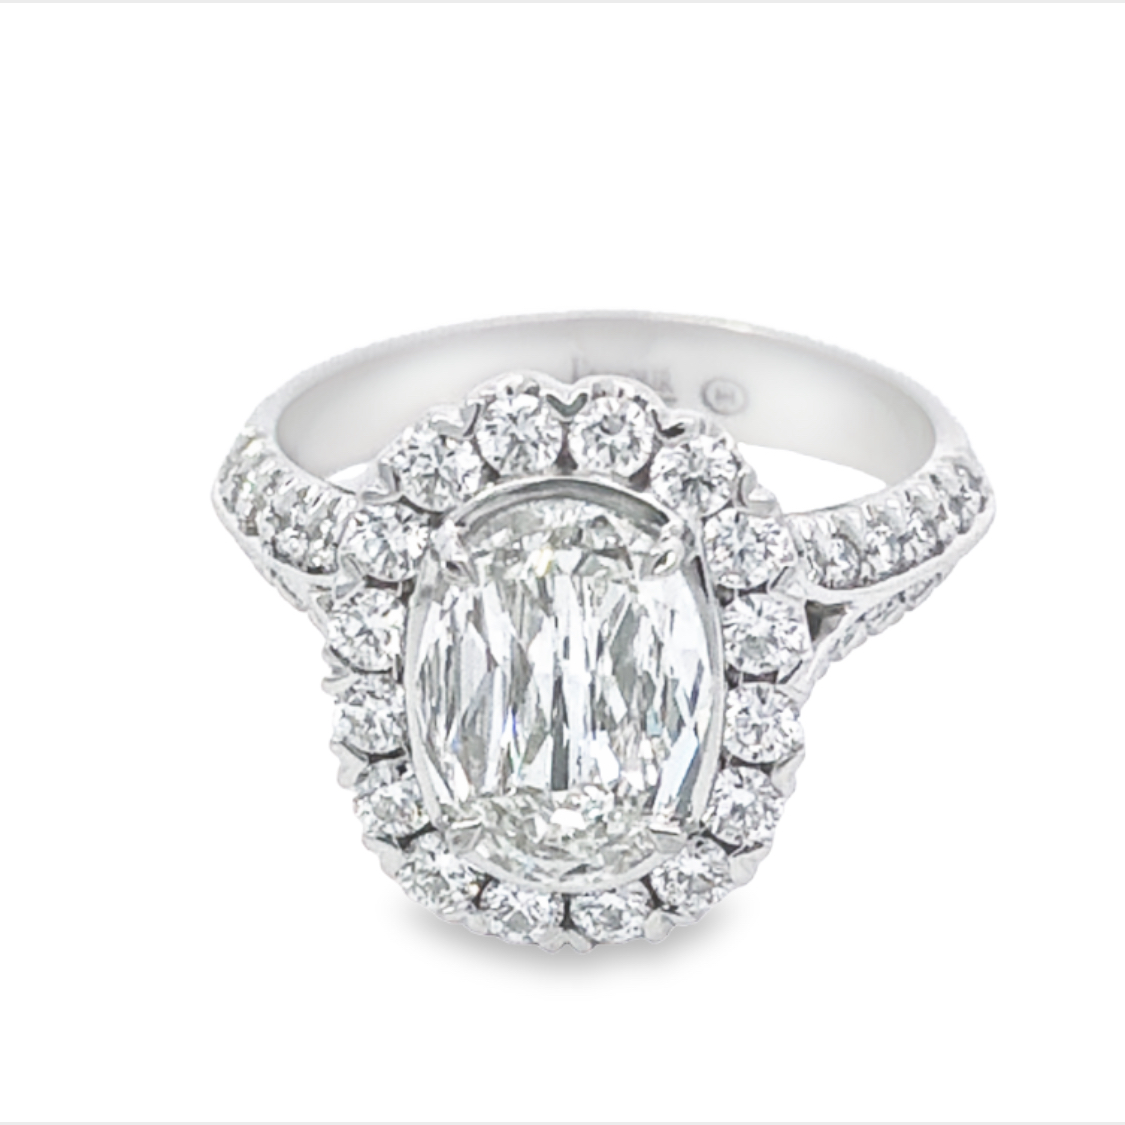 Christopher Designs 18K White Gold Diamond Halo Engagement Ring